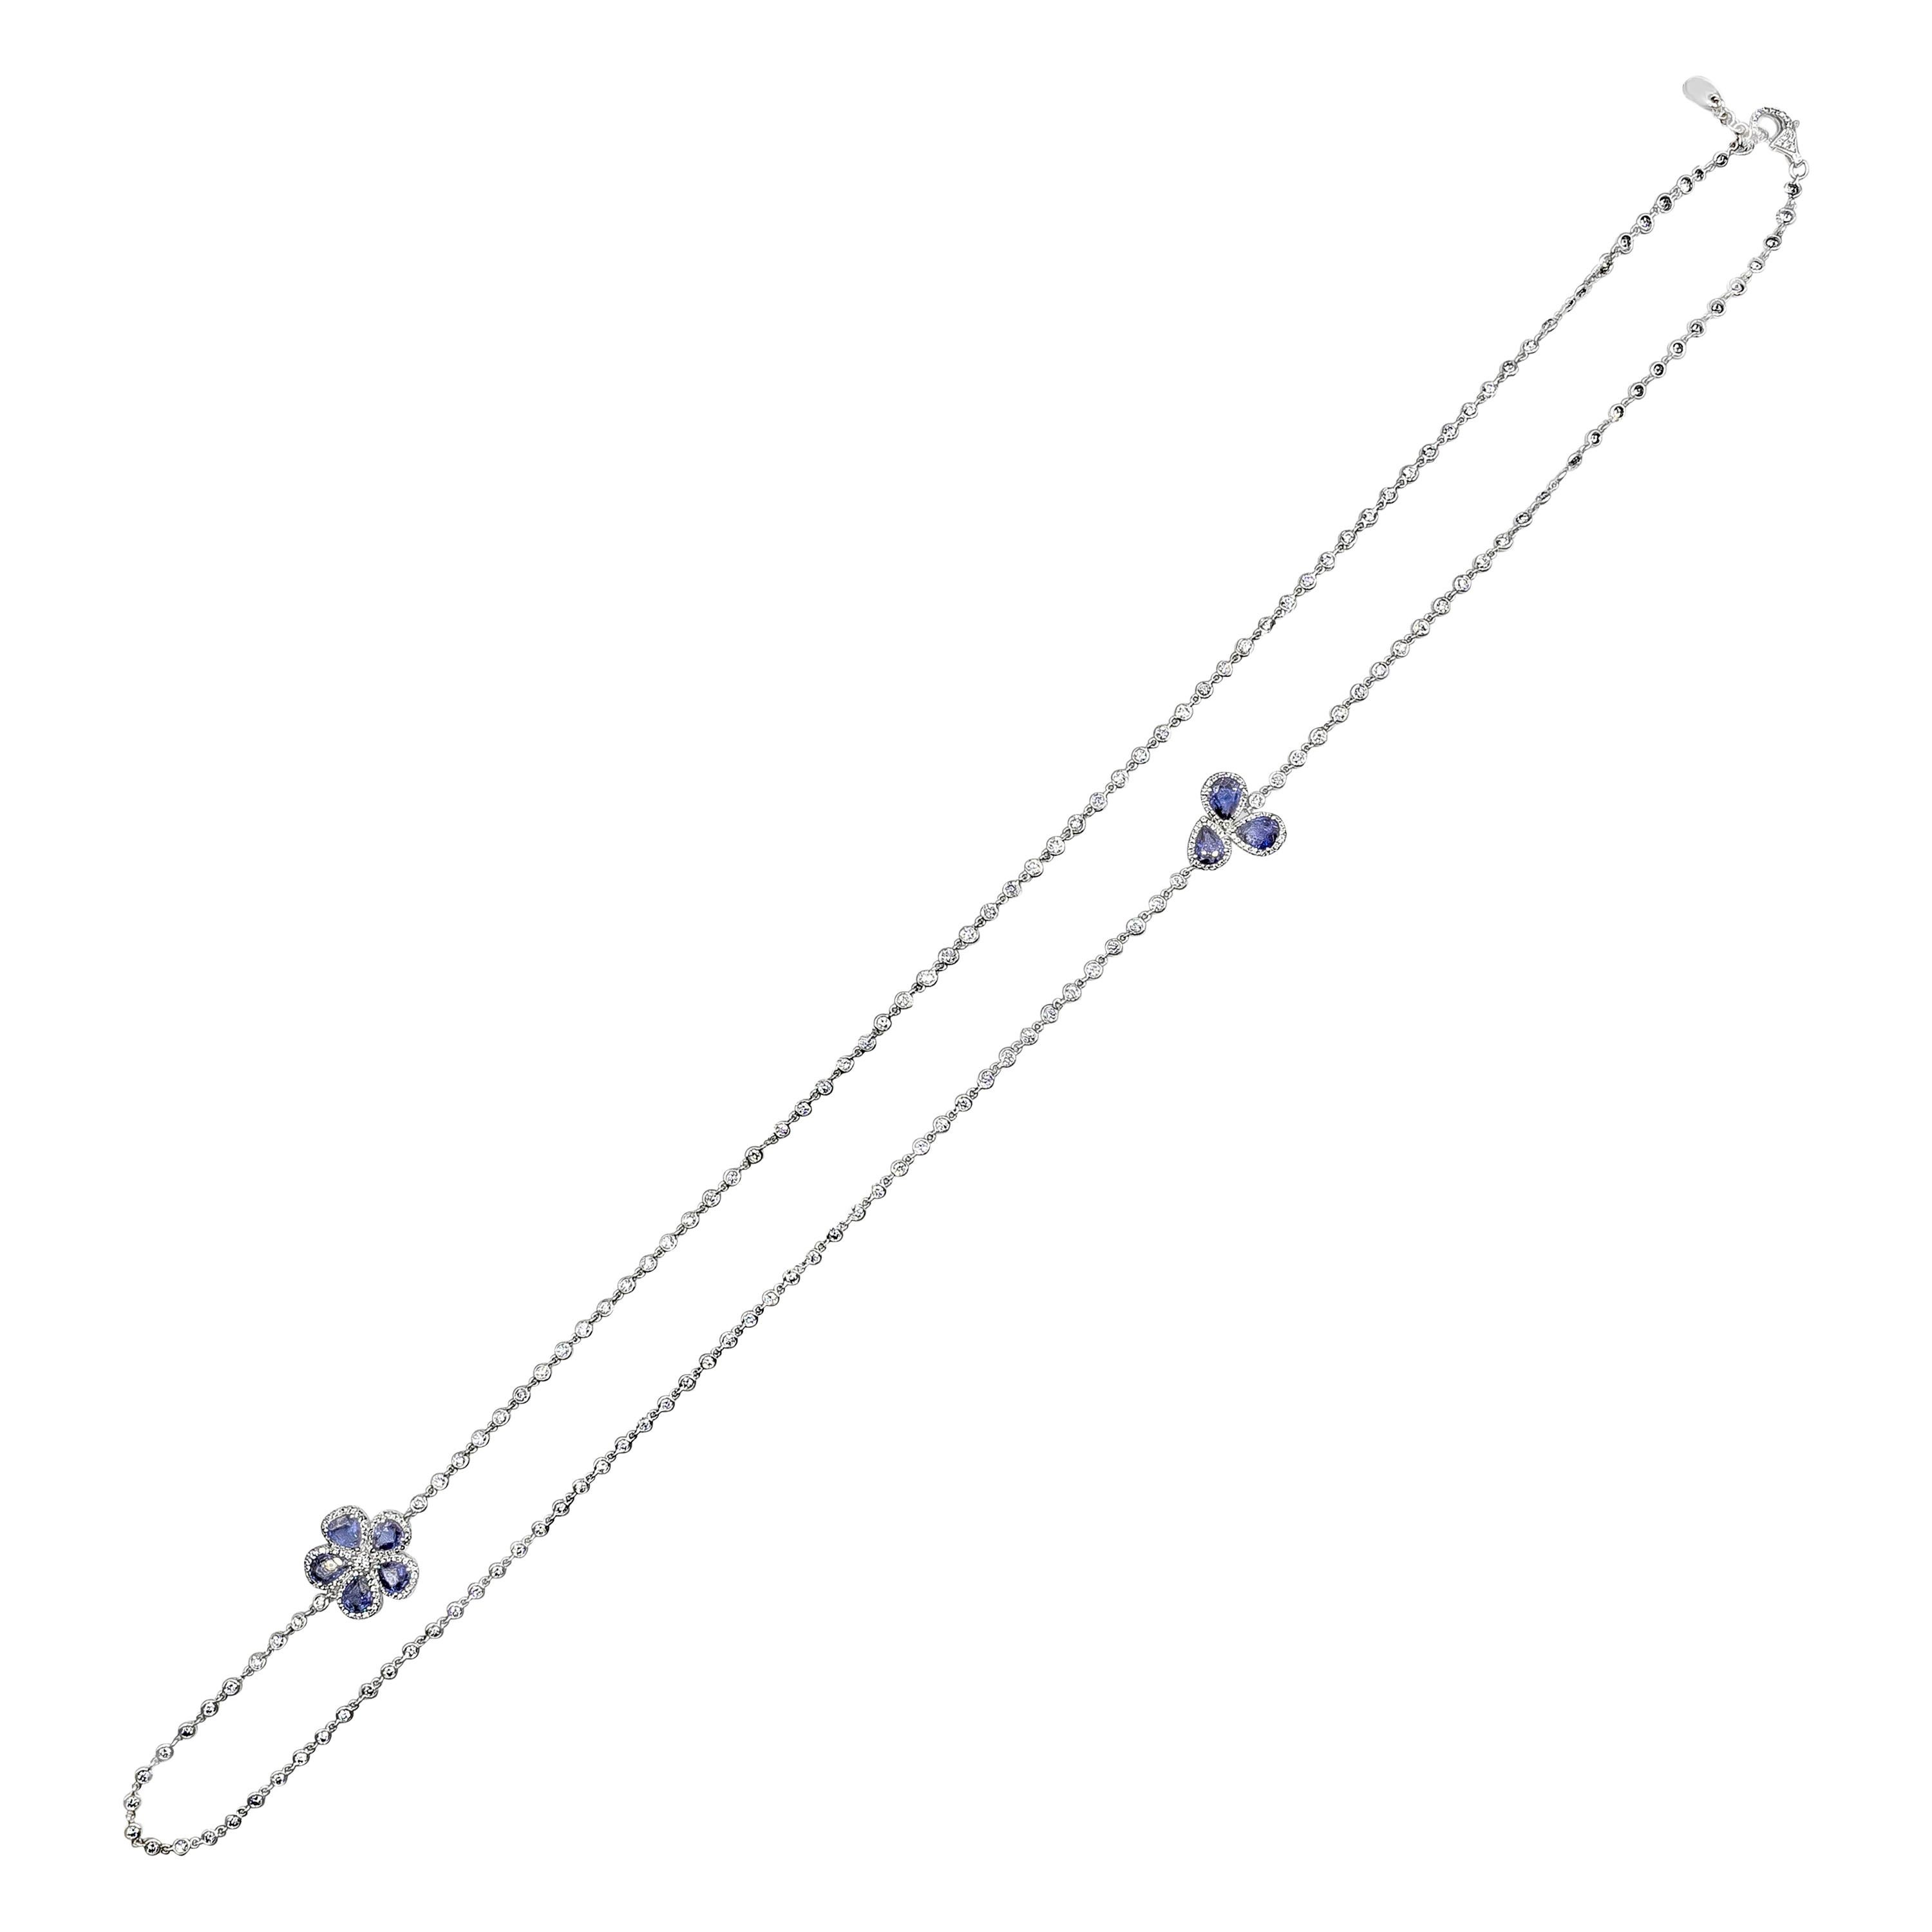 5.89 Carat Pear Shape Blue Sapphire with Diamond Flower Design Long Necklace For Sale